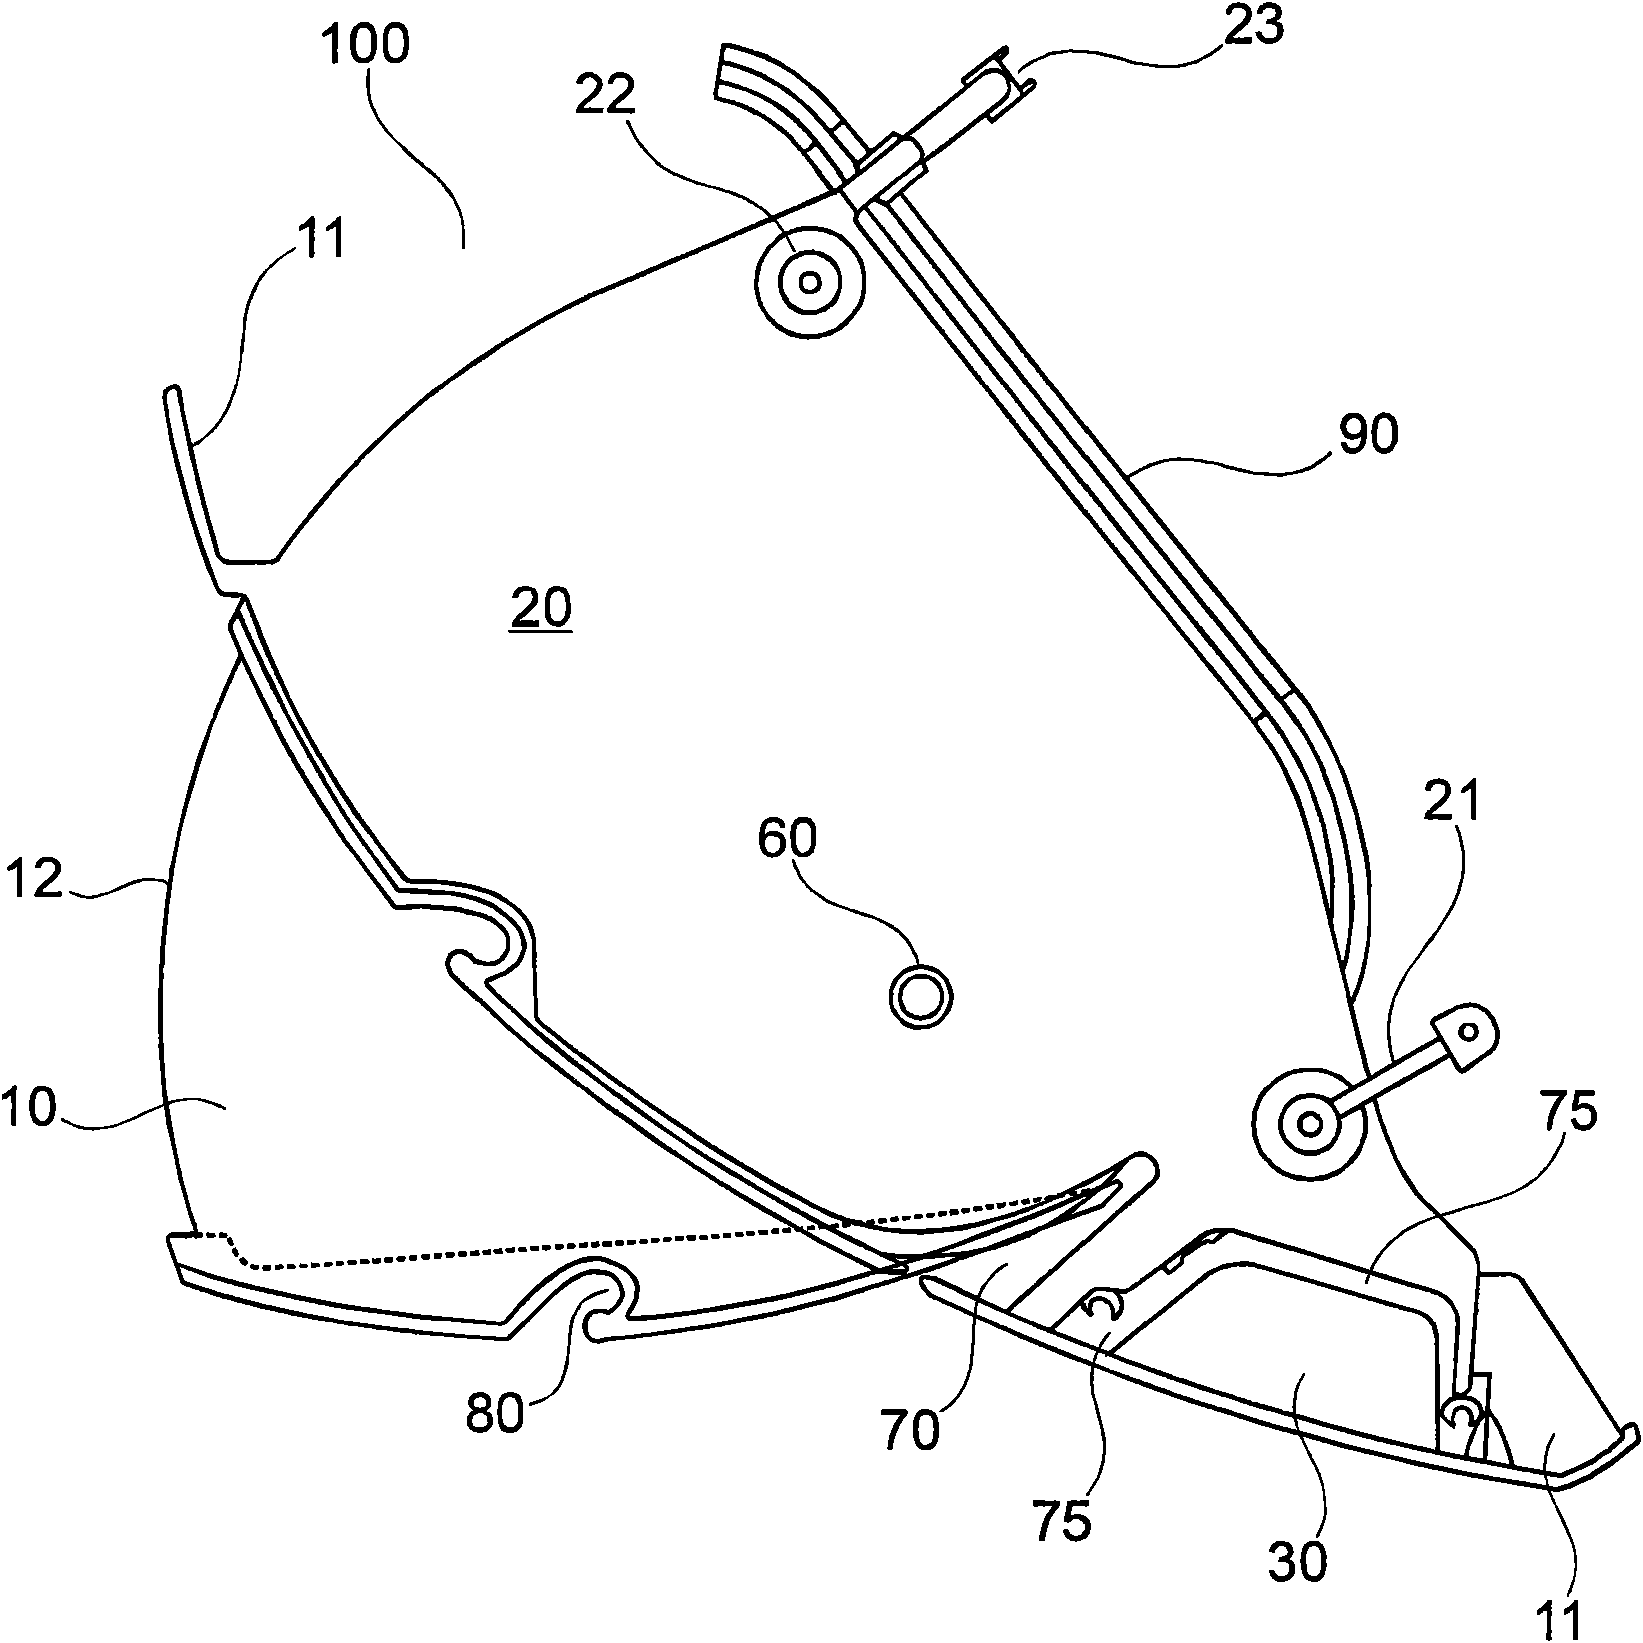 Modular hatrack for a passenger compartment of an aircraft